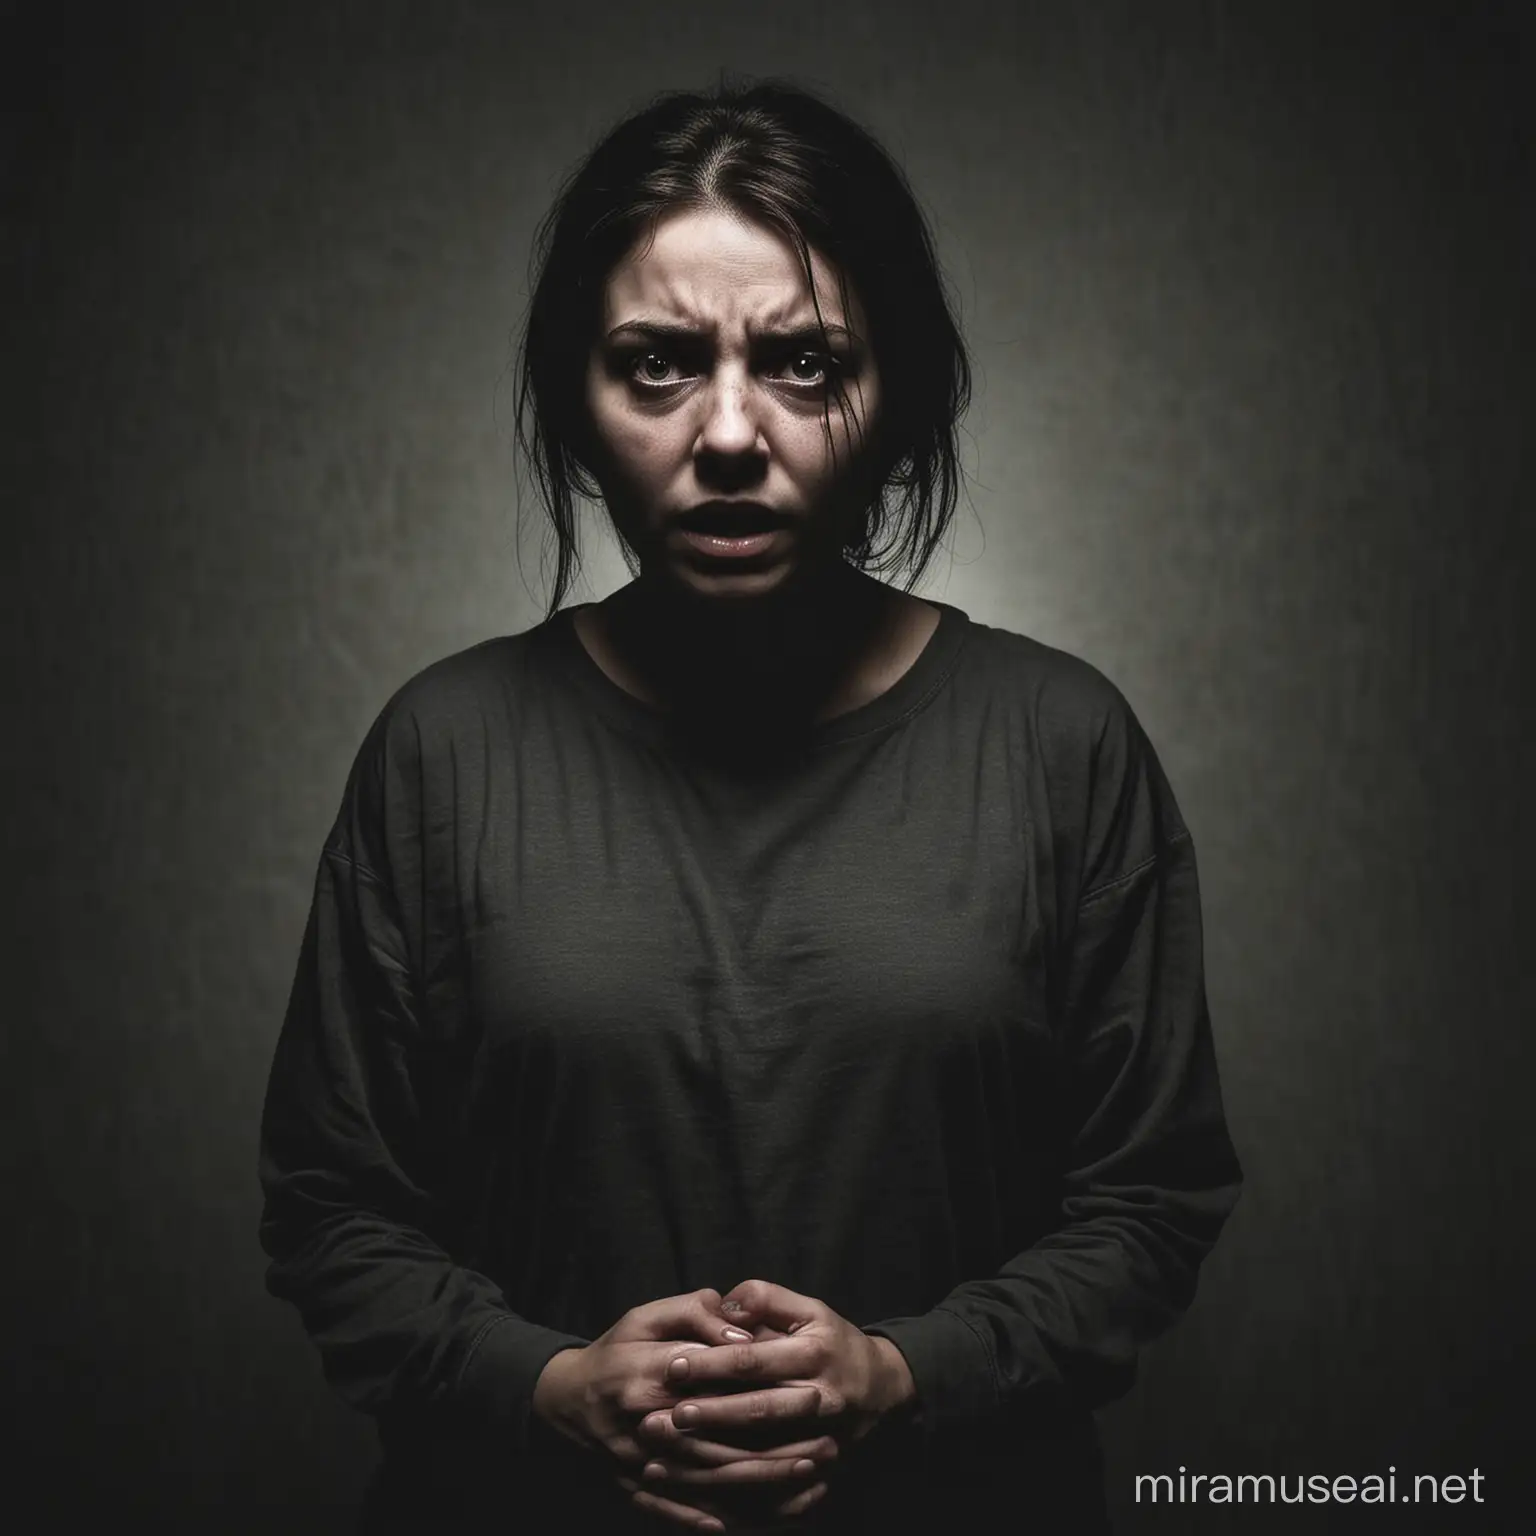 Terrified Woman Held Captive in a Dark Room